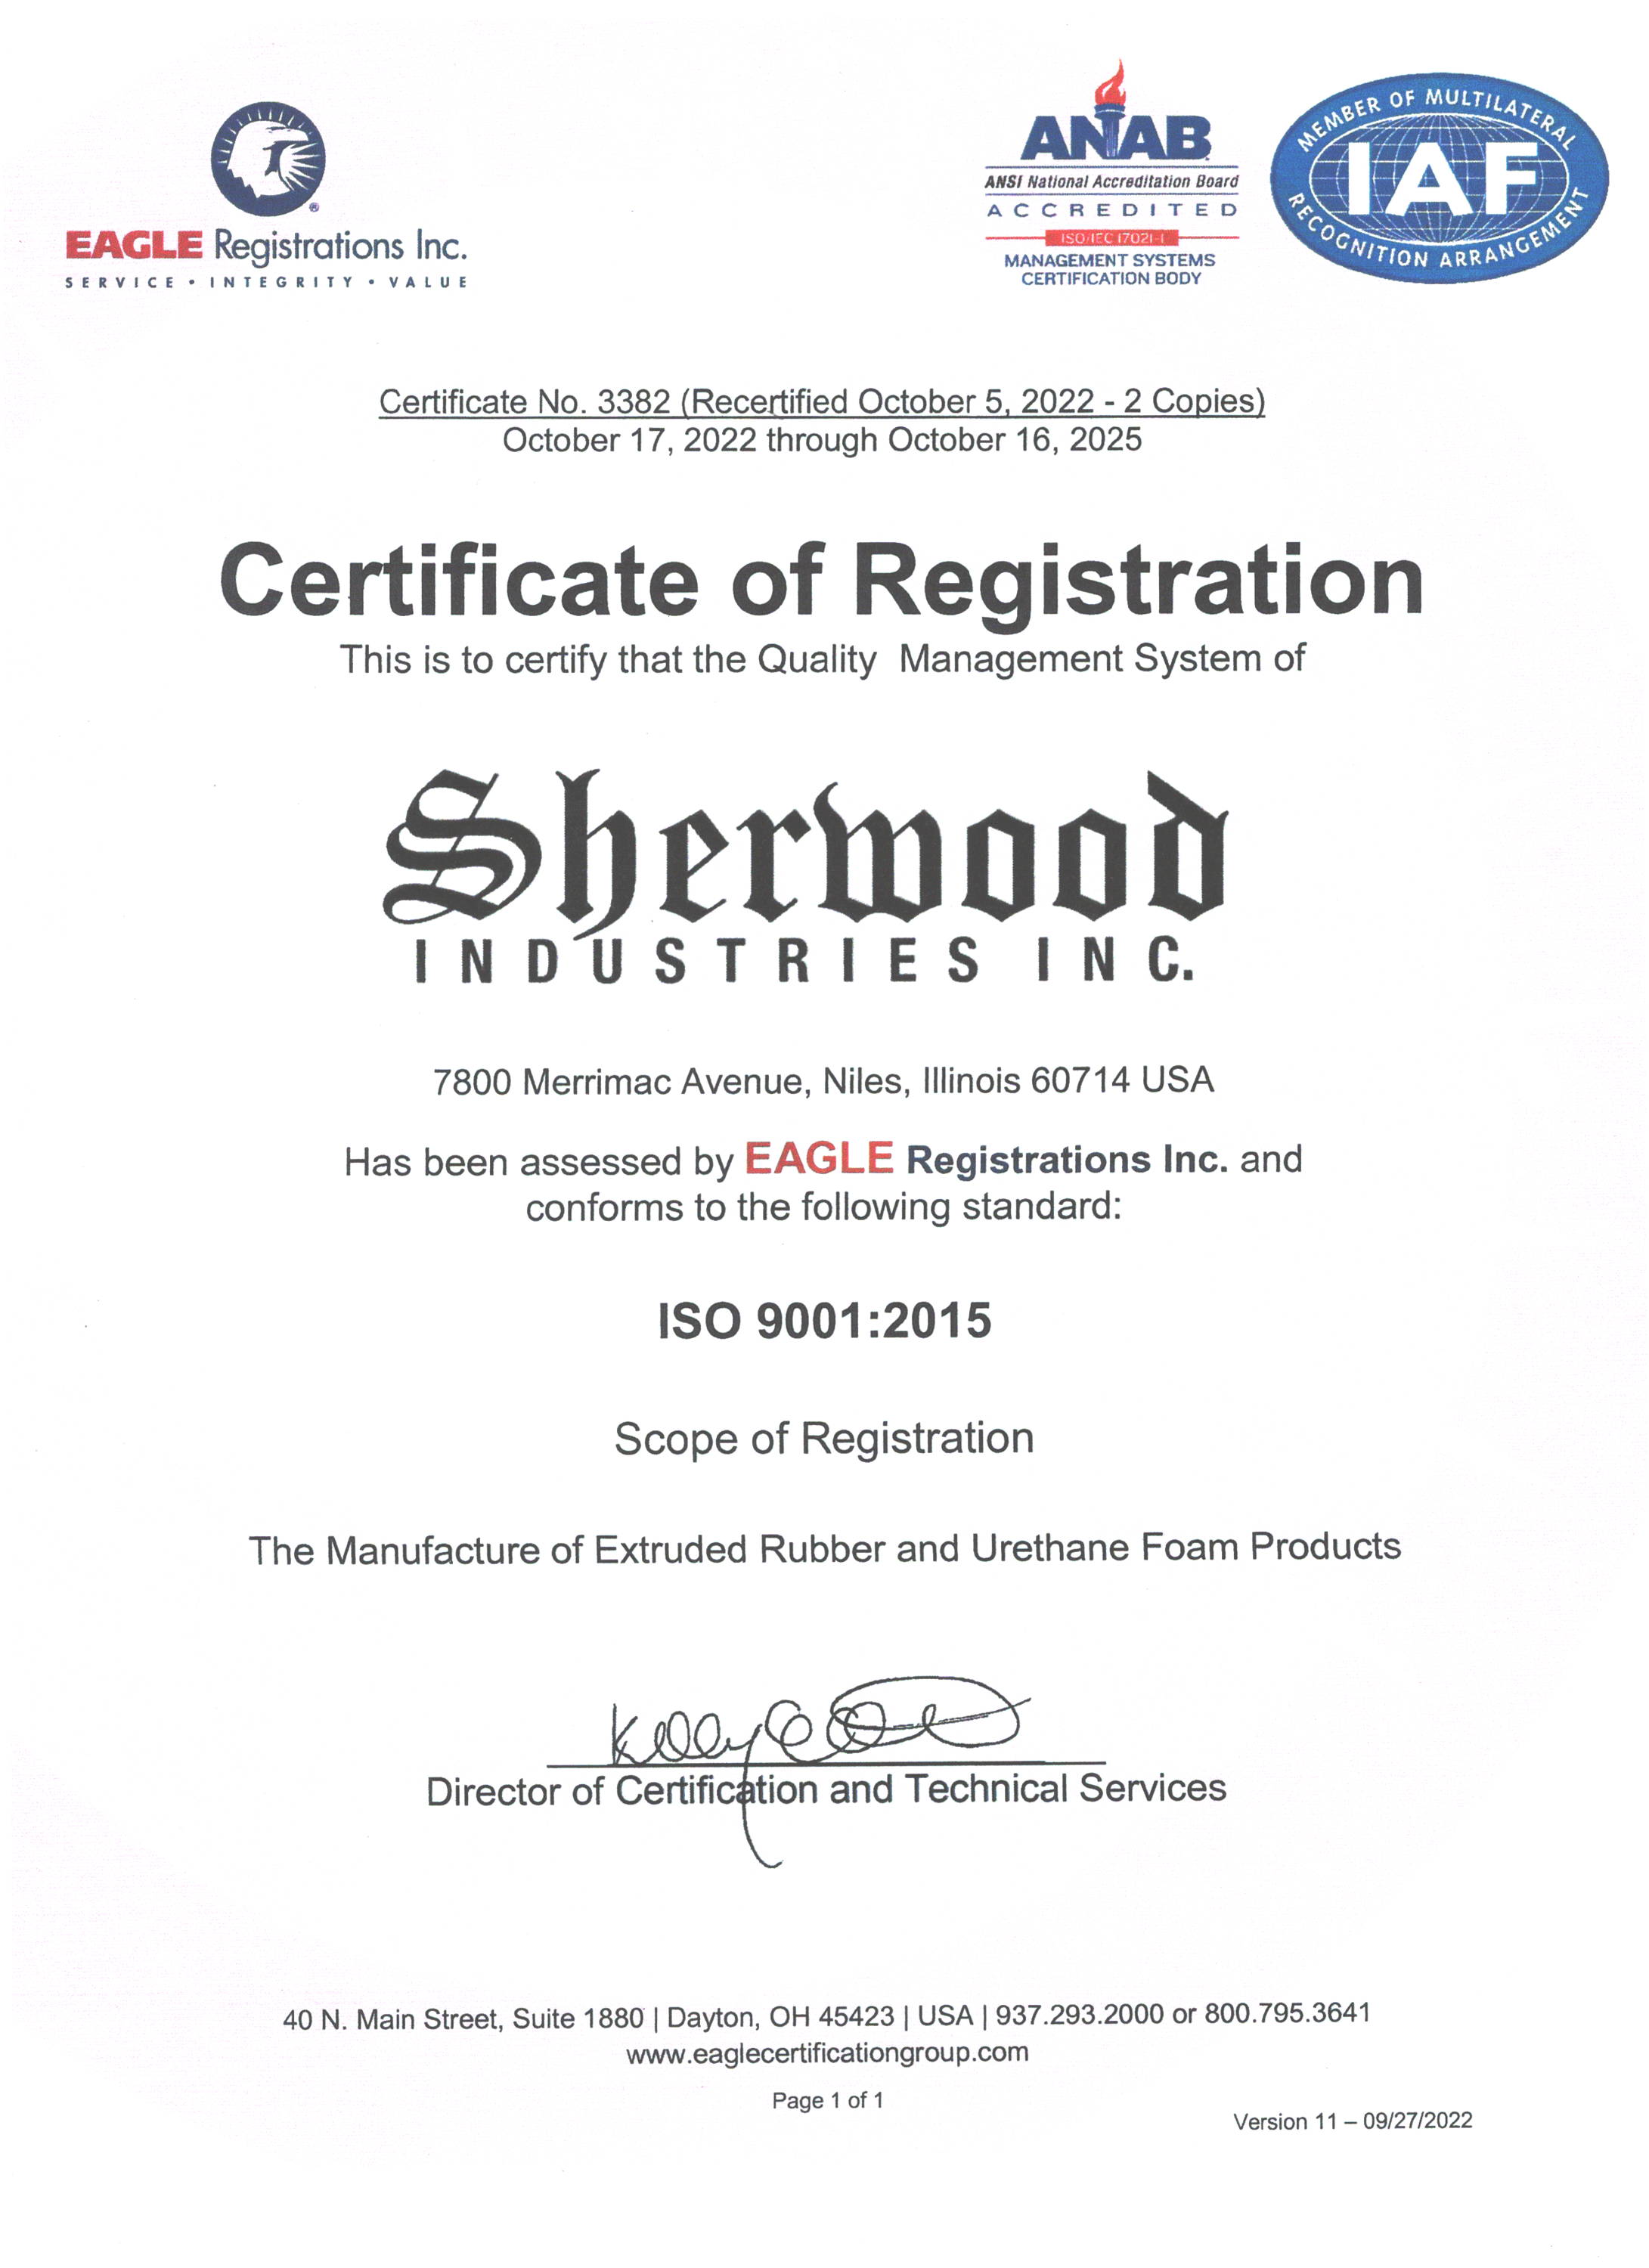 Sherwood ISO Certificate